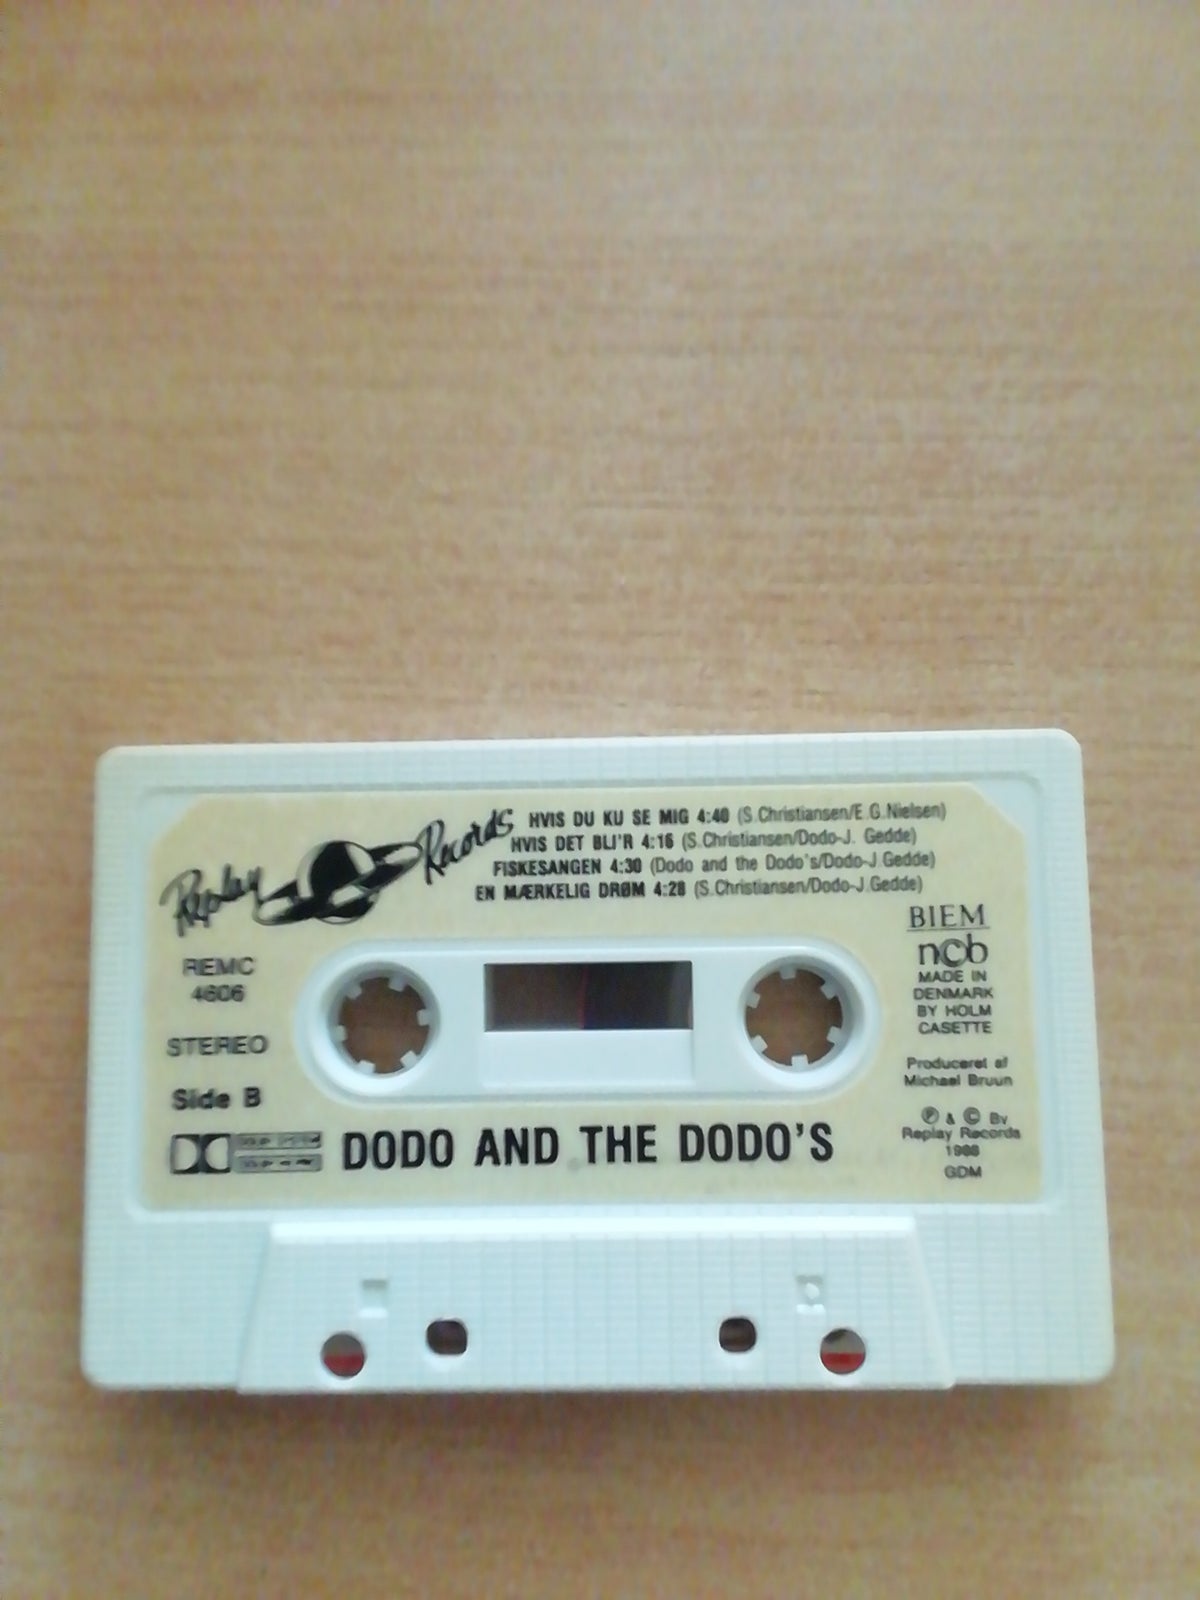 Bånd, Dodo and the Dodos, 1988